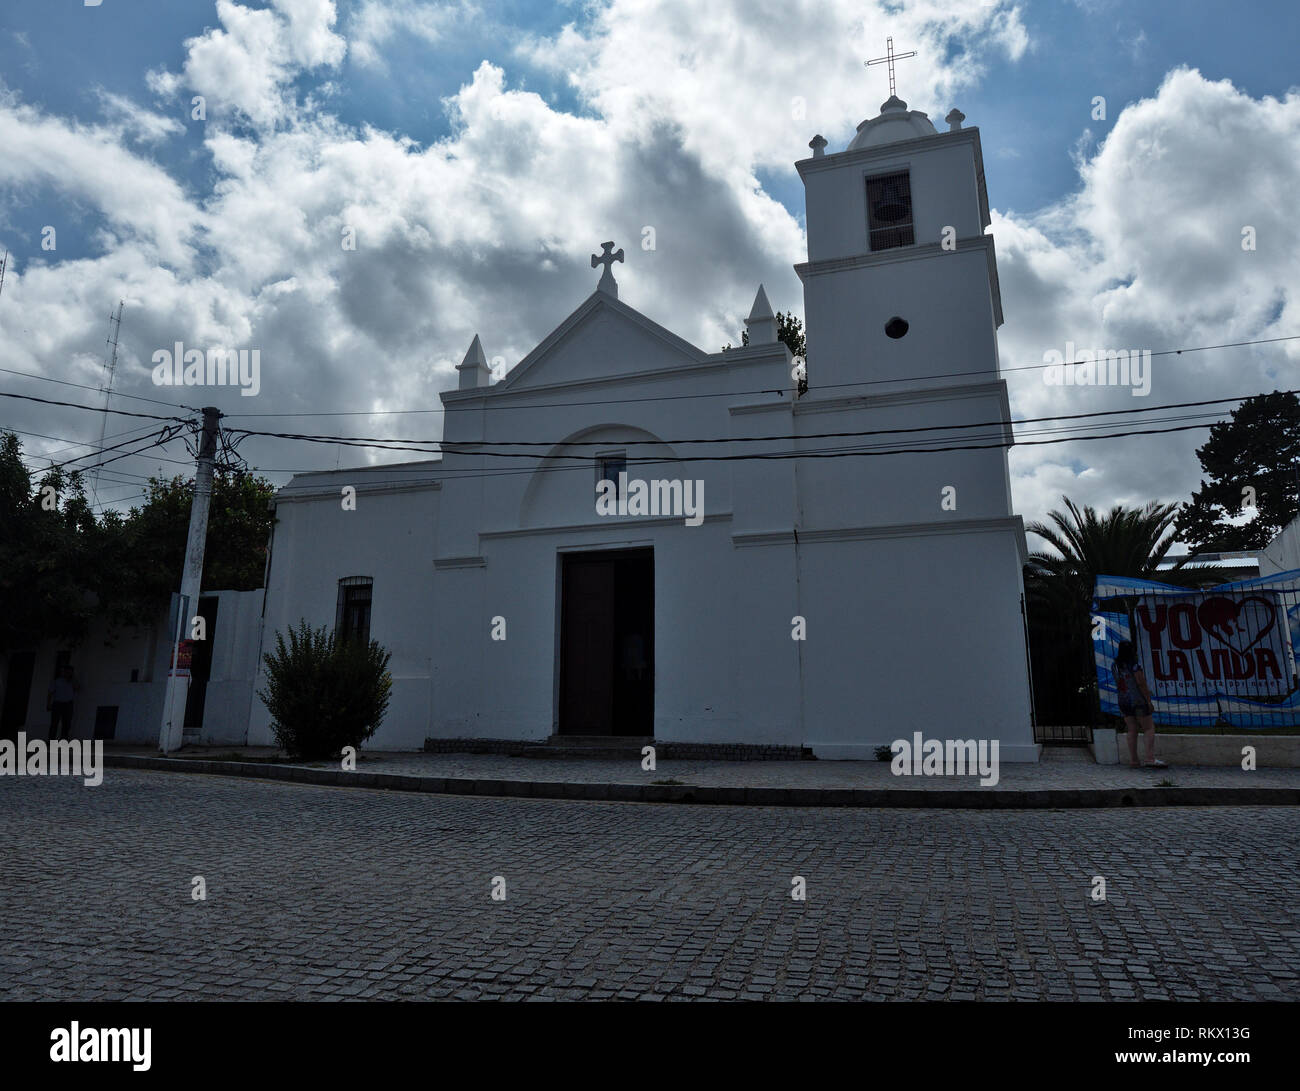 Merlo, San Luis, Argentina - 2019: Exterior view of Parroquia Nuestra Señora del Rosario church, located at the city center. Stock Photo